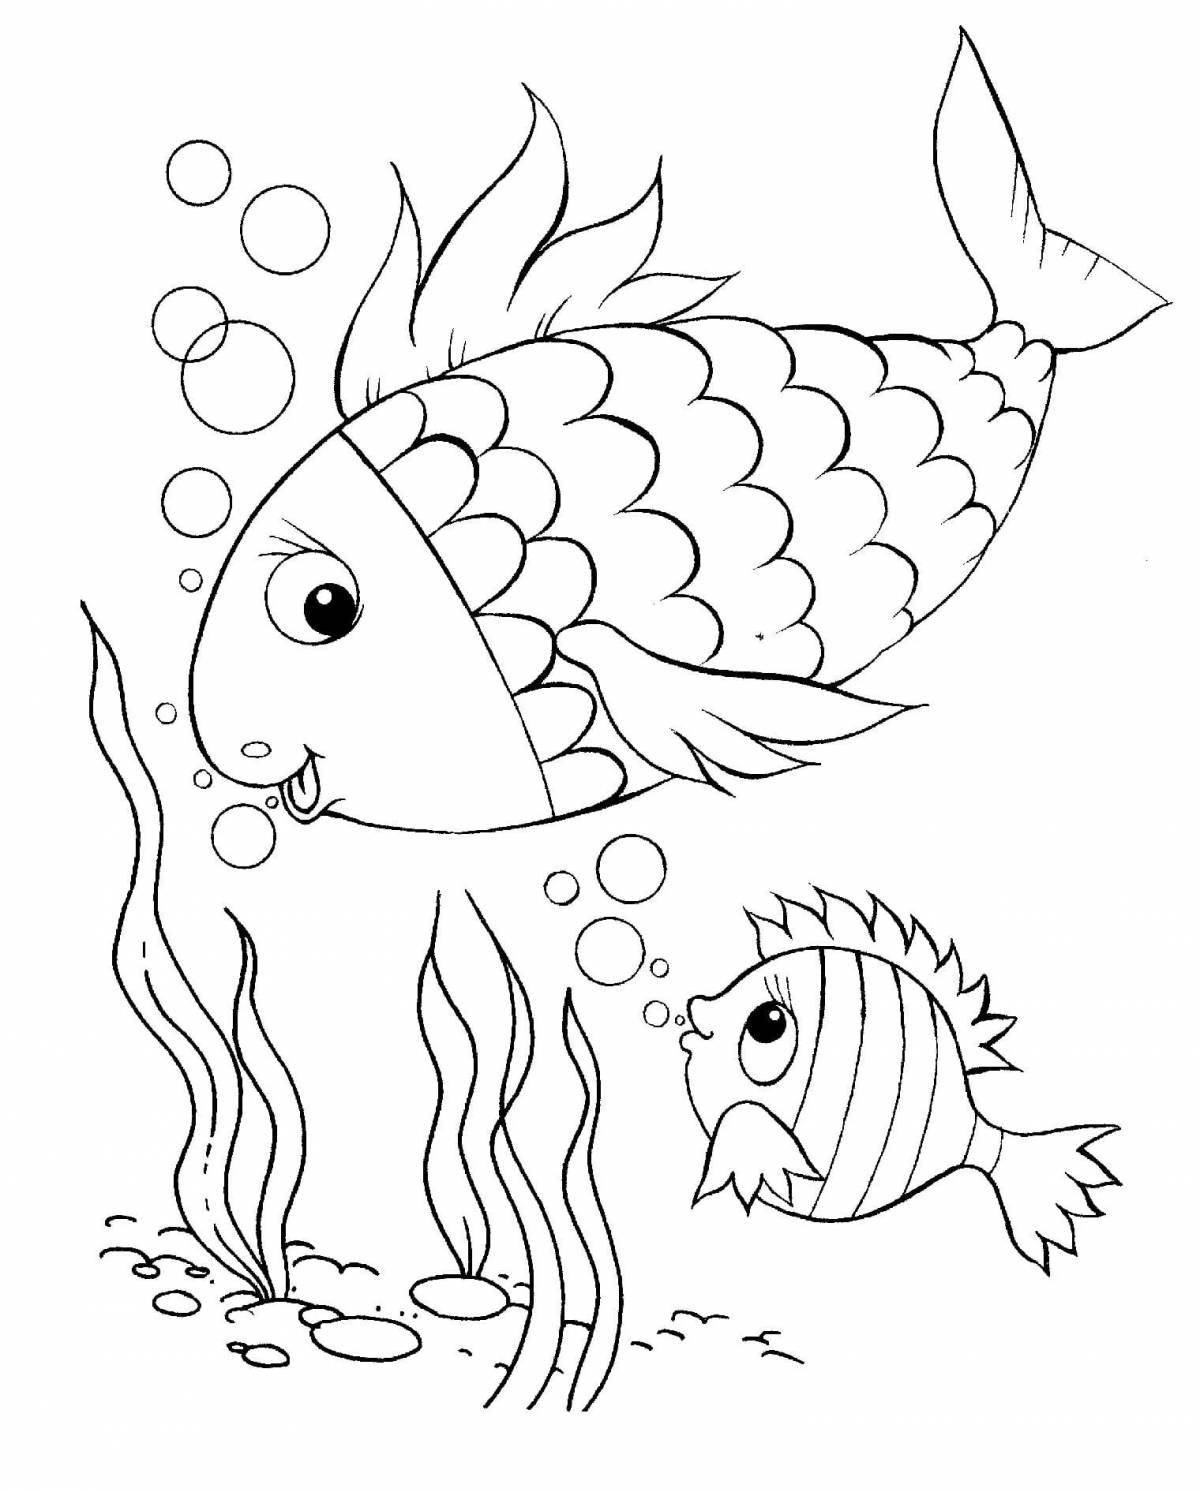 Adorable sea fish coloring book